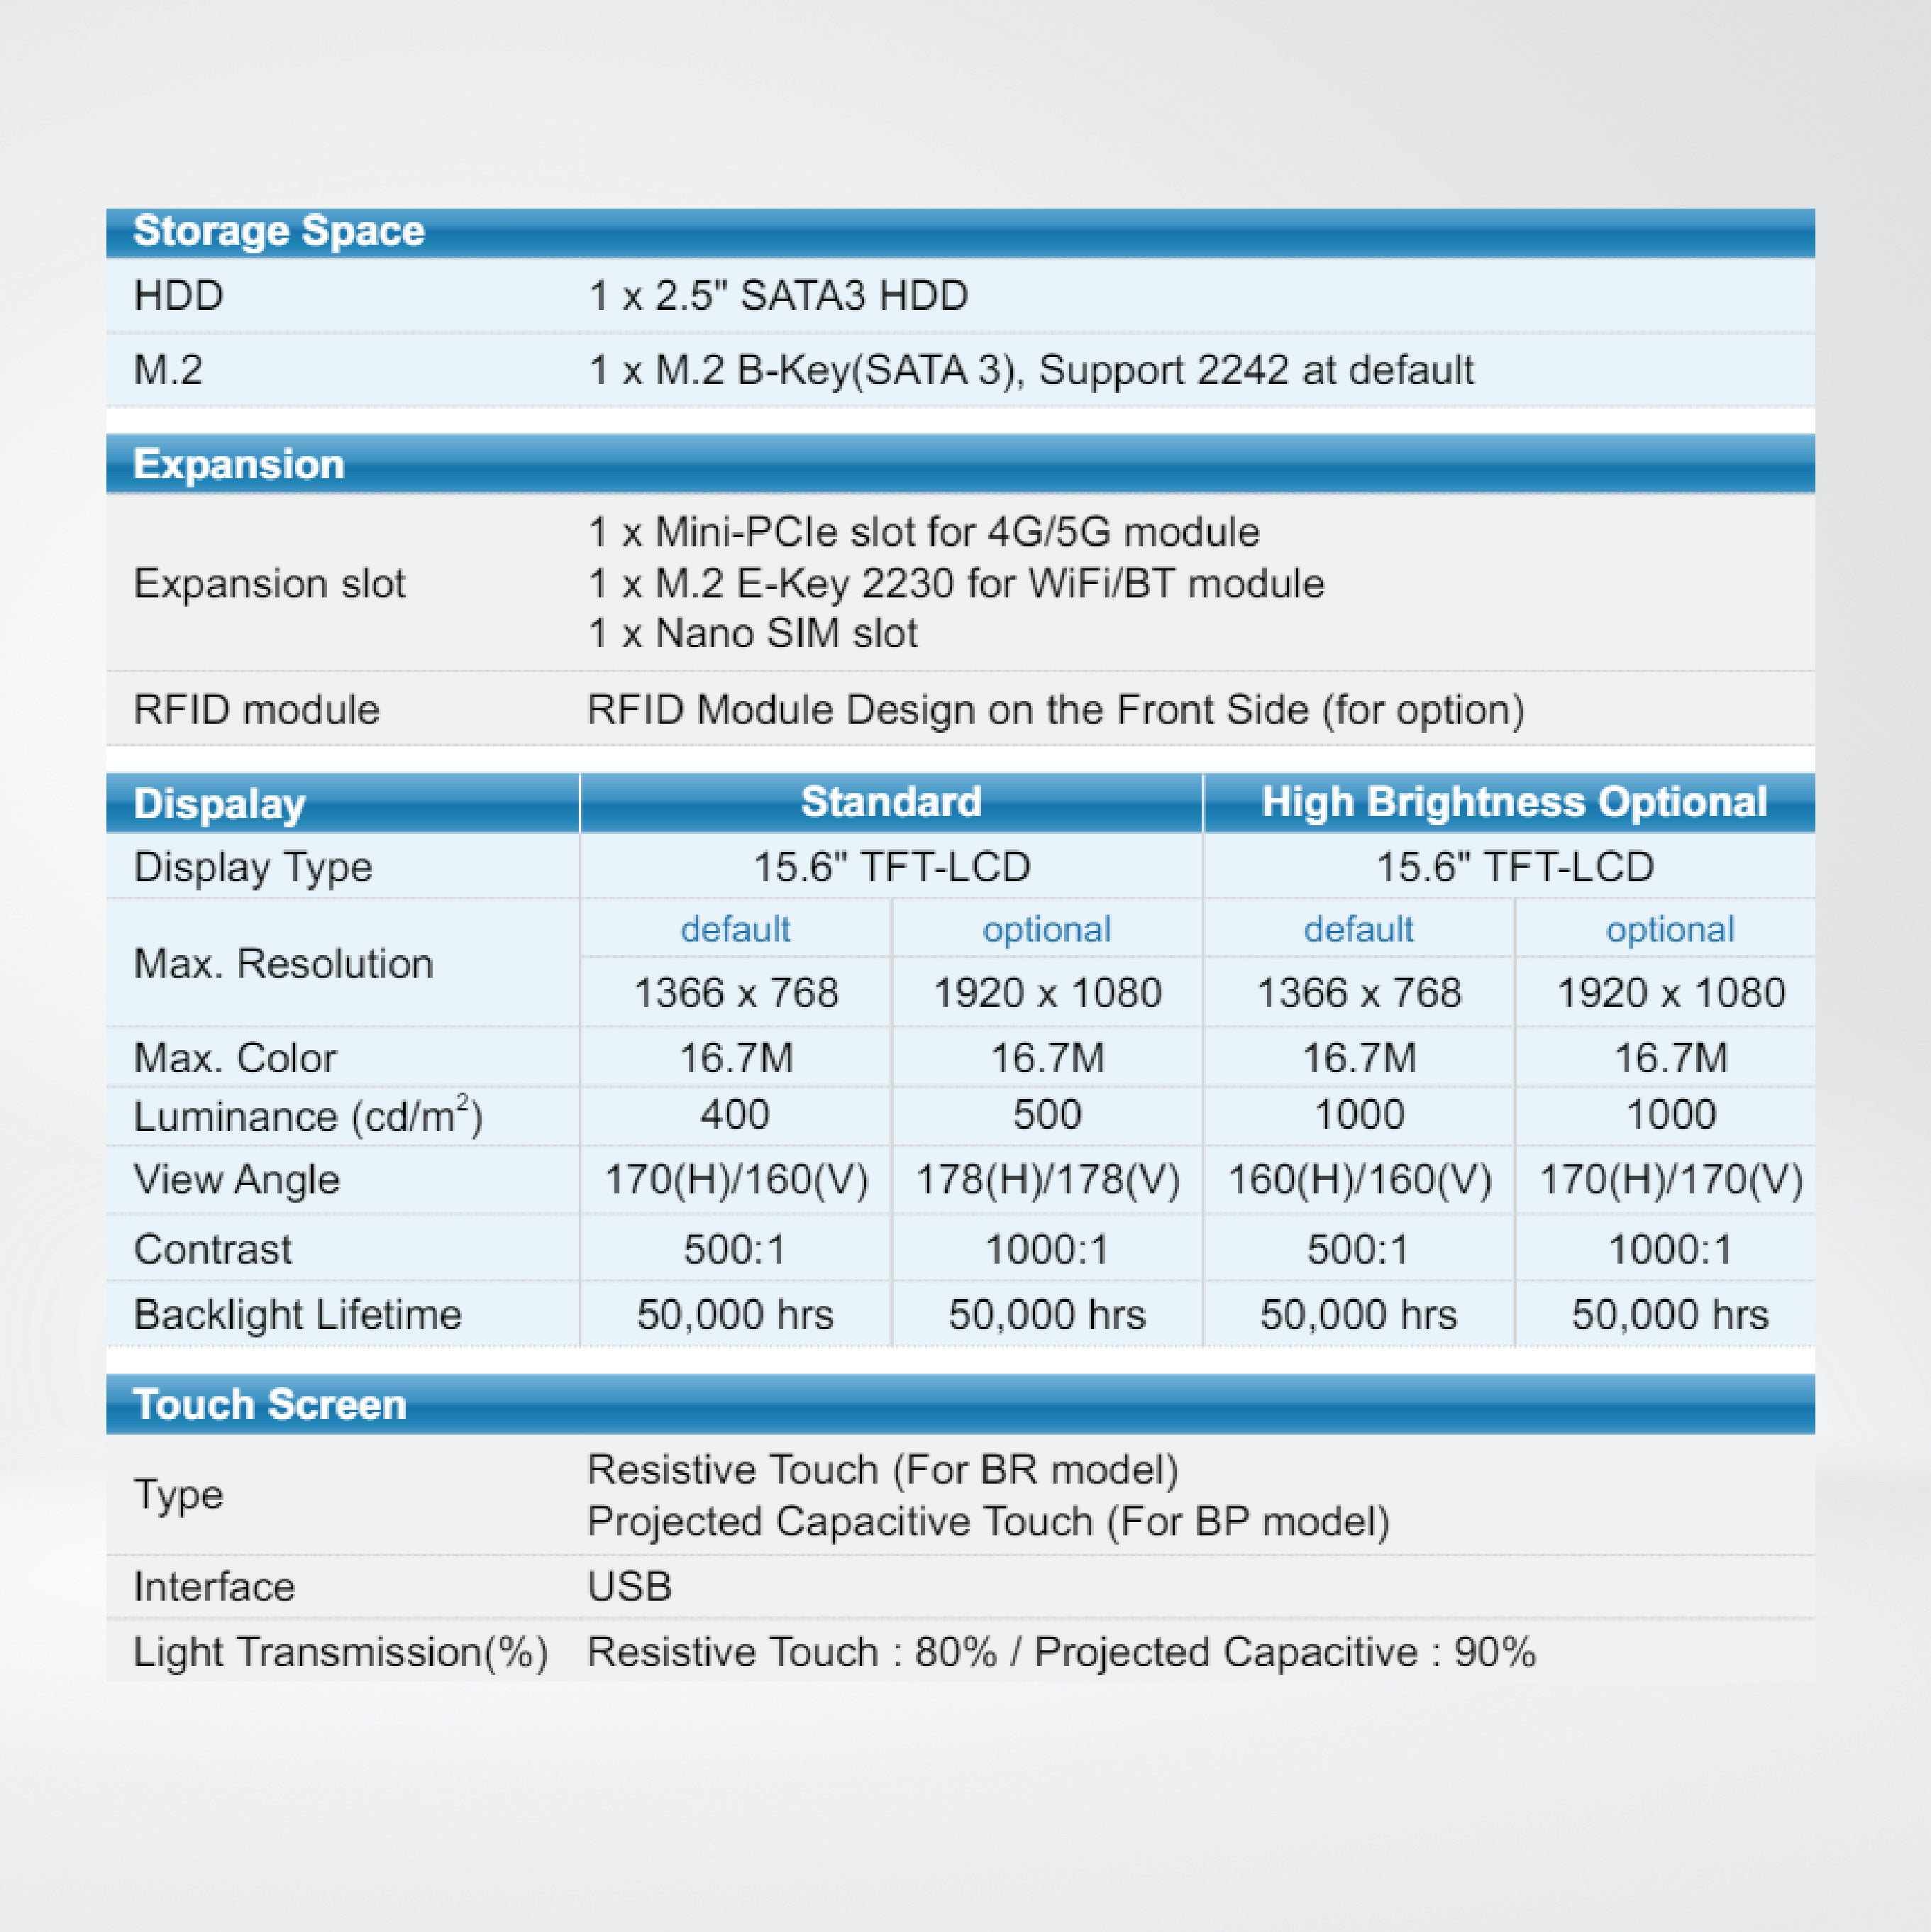 ViTAM-816B 15.6" IP66 / IP69K Stainless Steel Panel PC